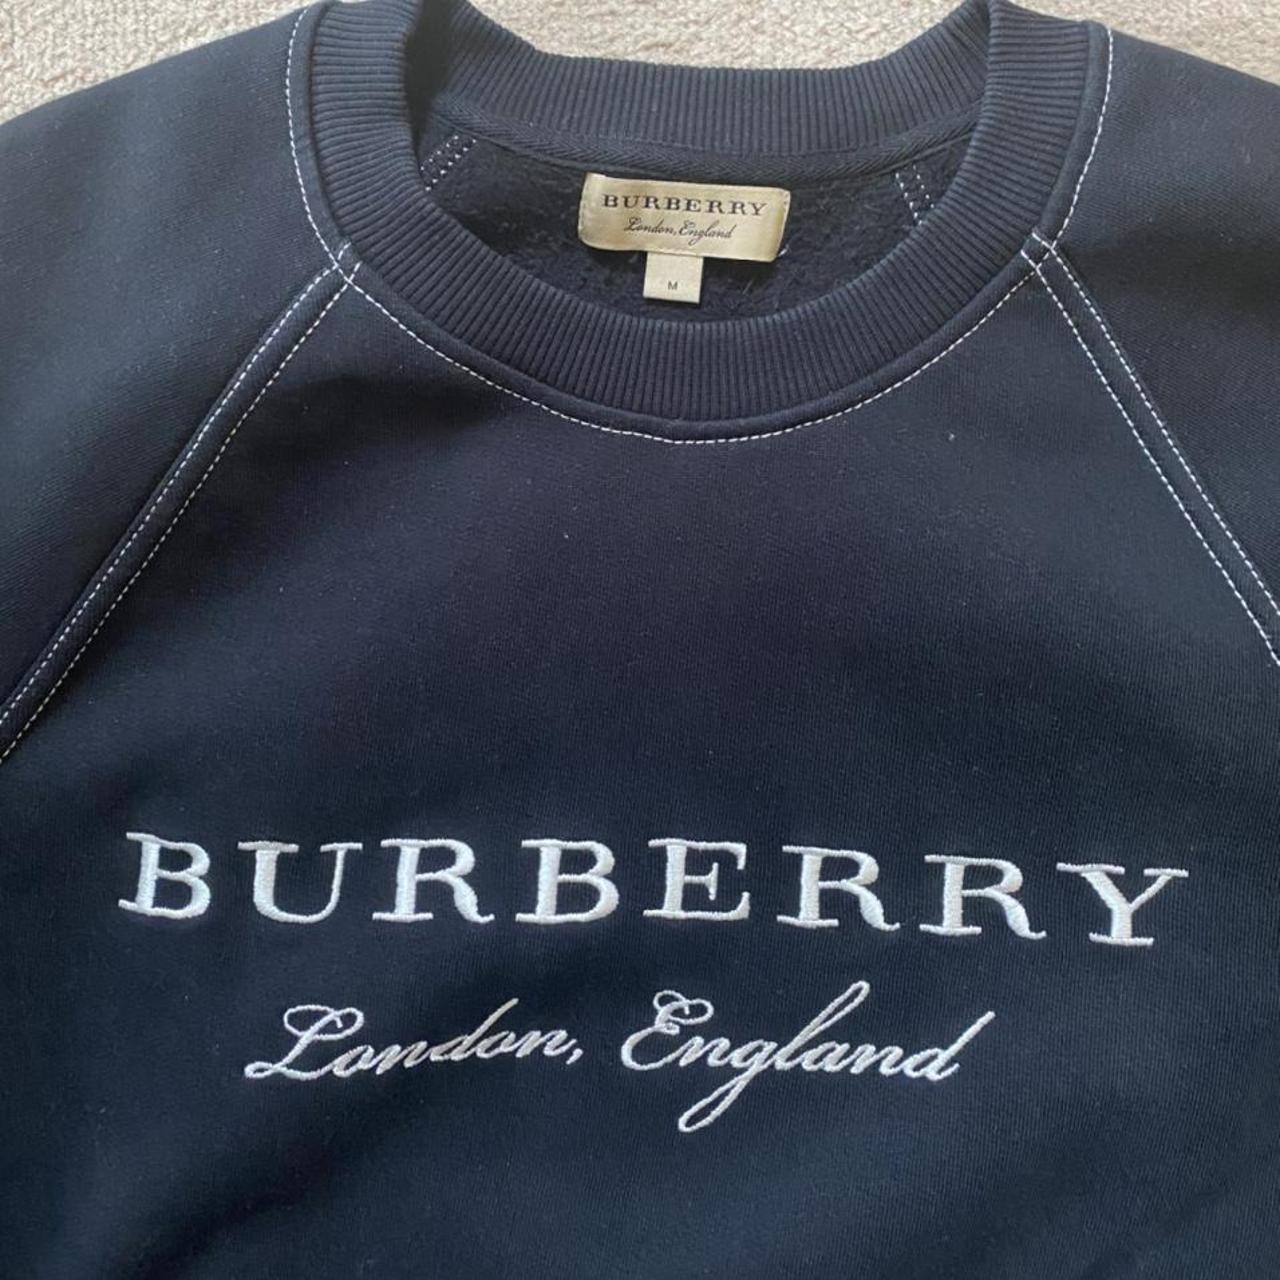 Burberry London England Black Jumper/ Sweatshirt... - Depop